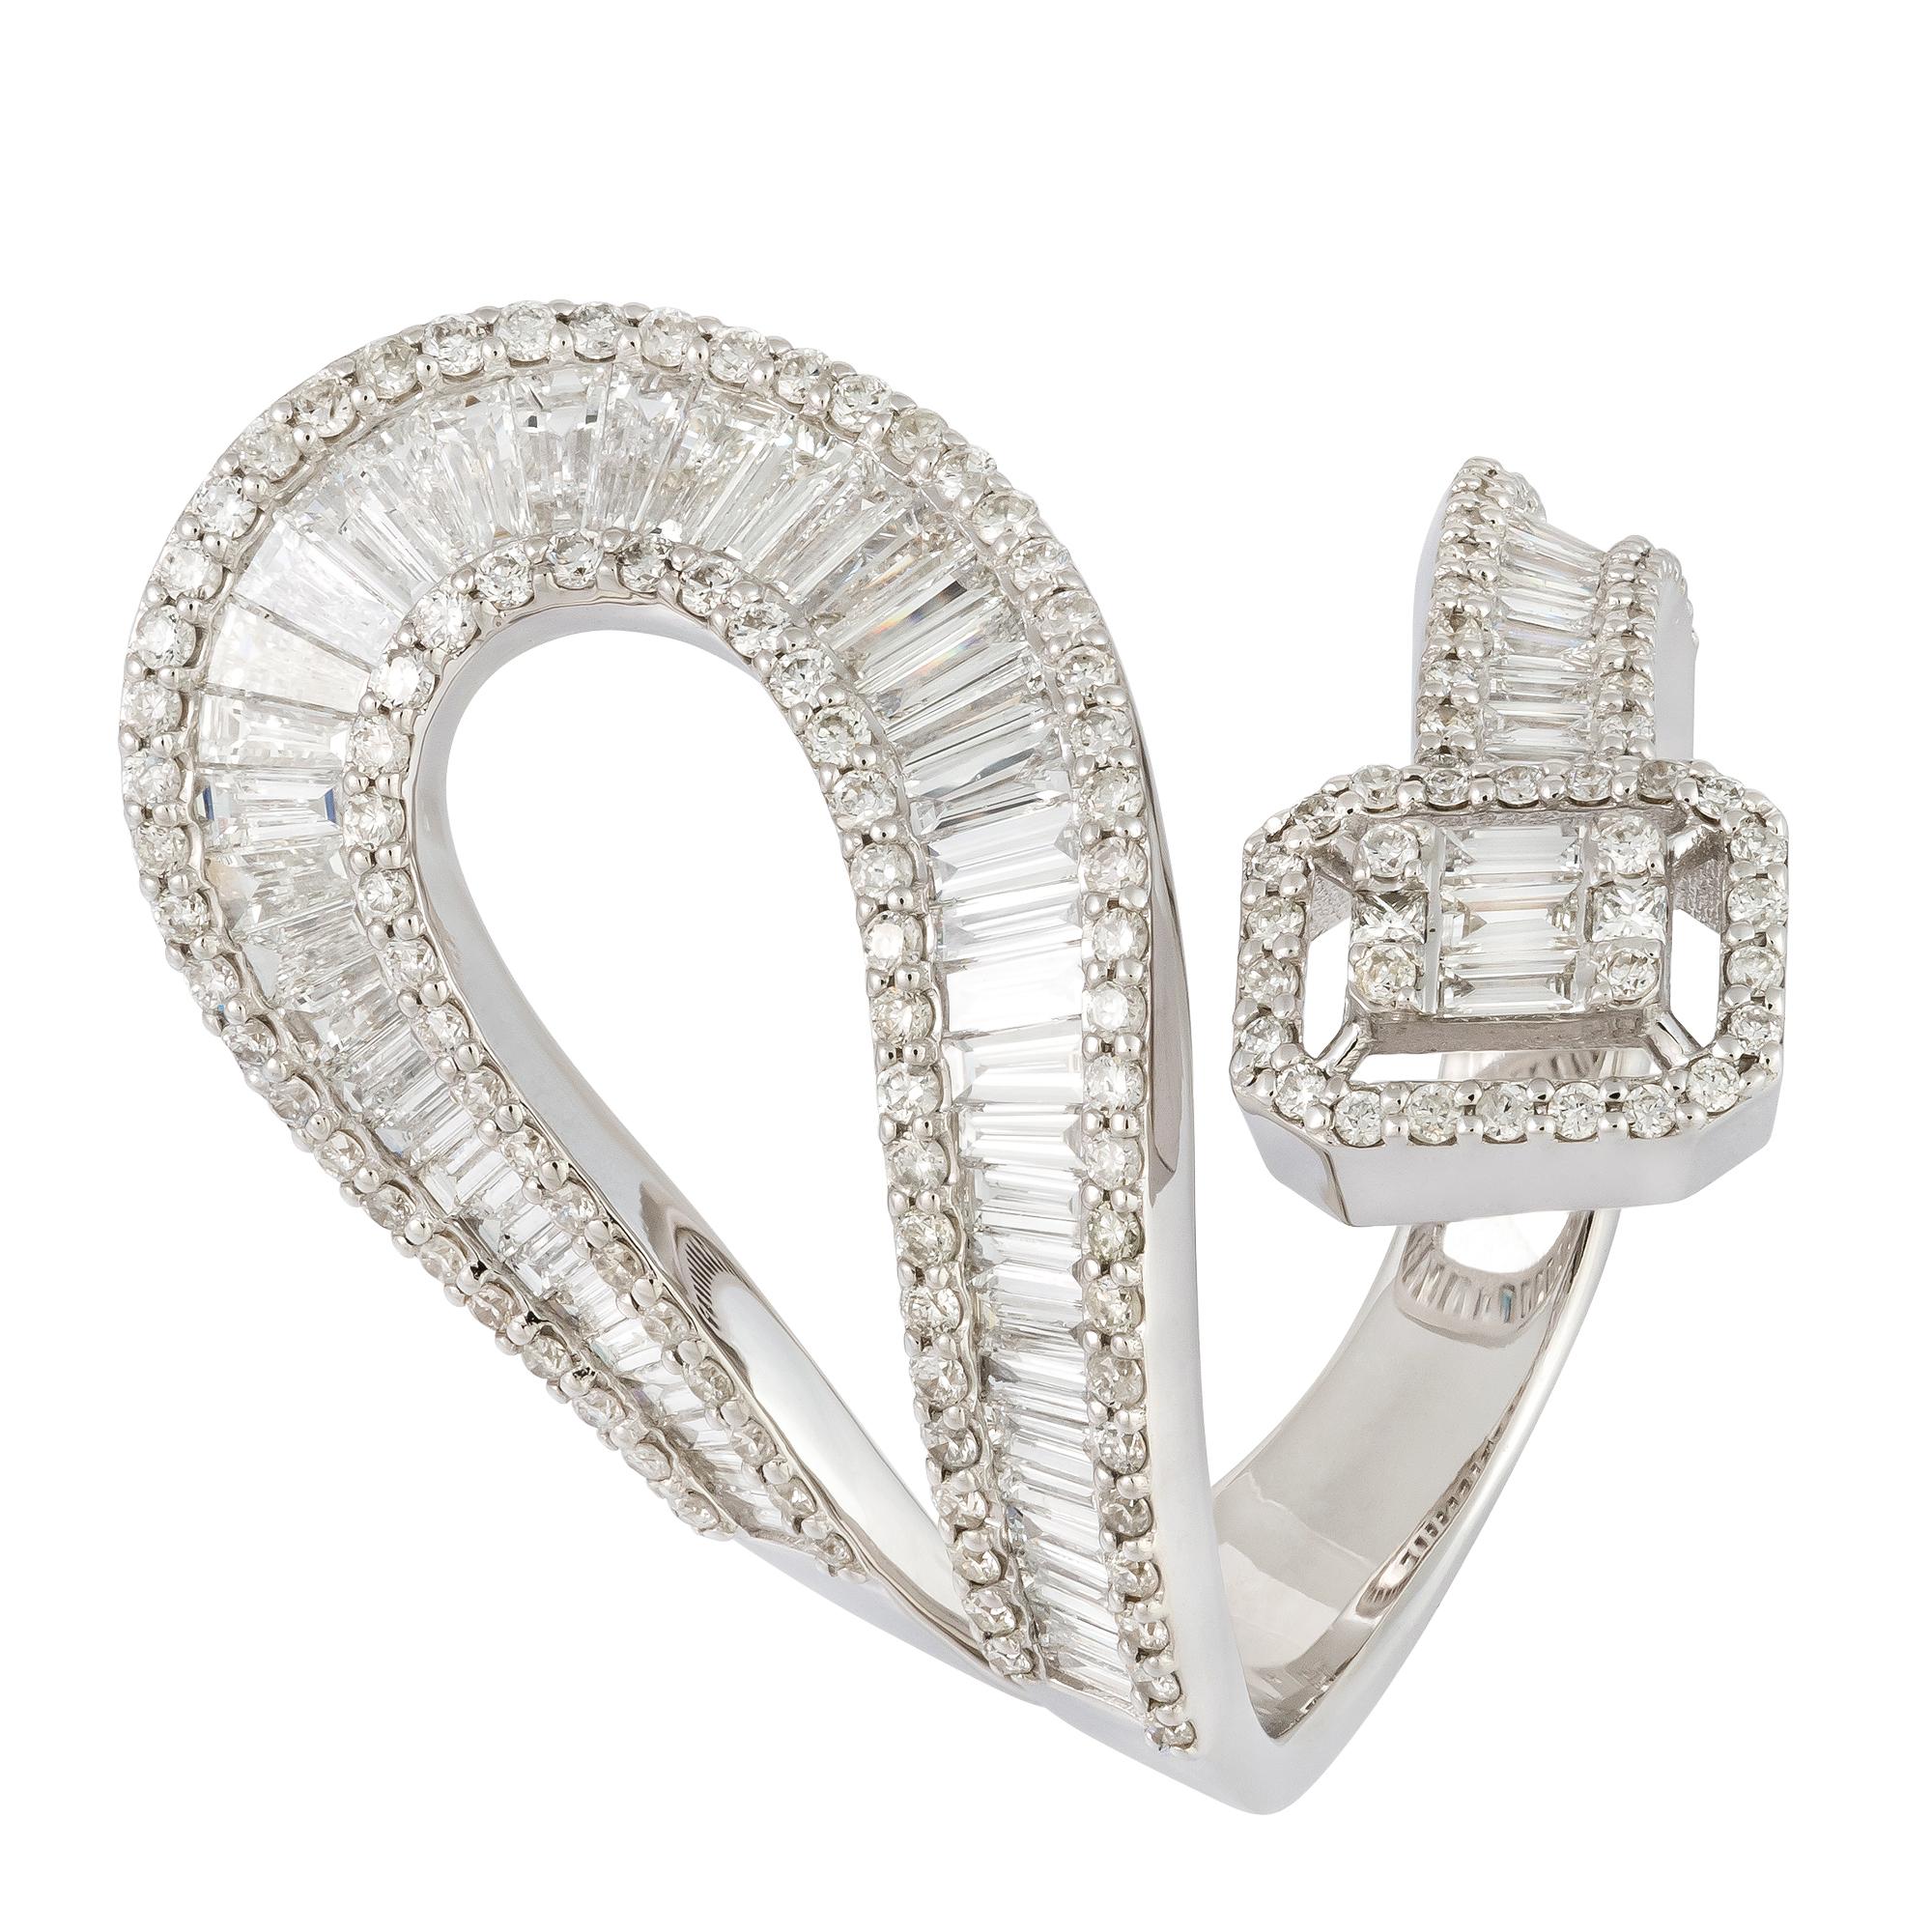 For Sale:  Unique White 18K Gold White Diamond Ring For Her 4